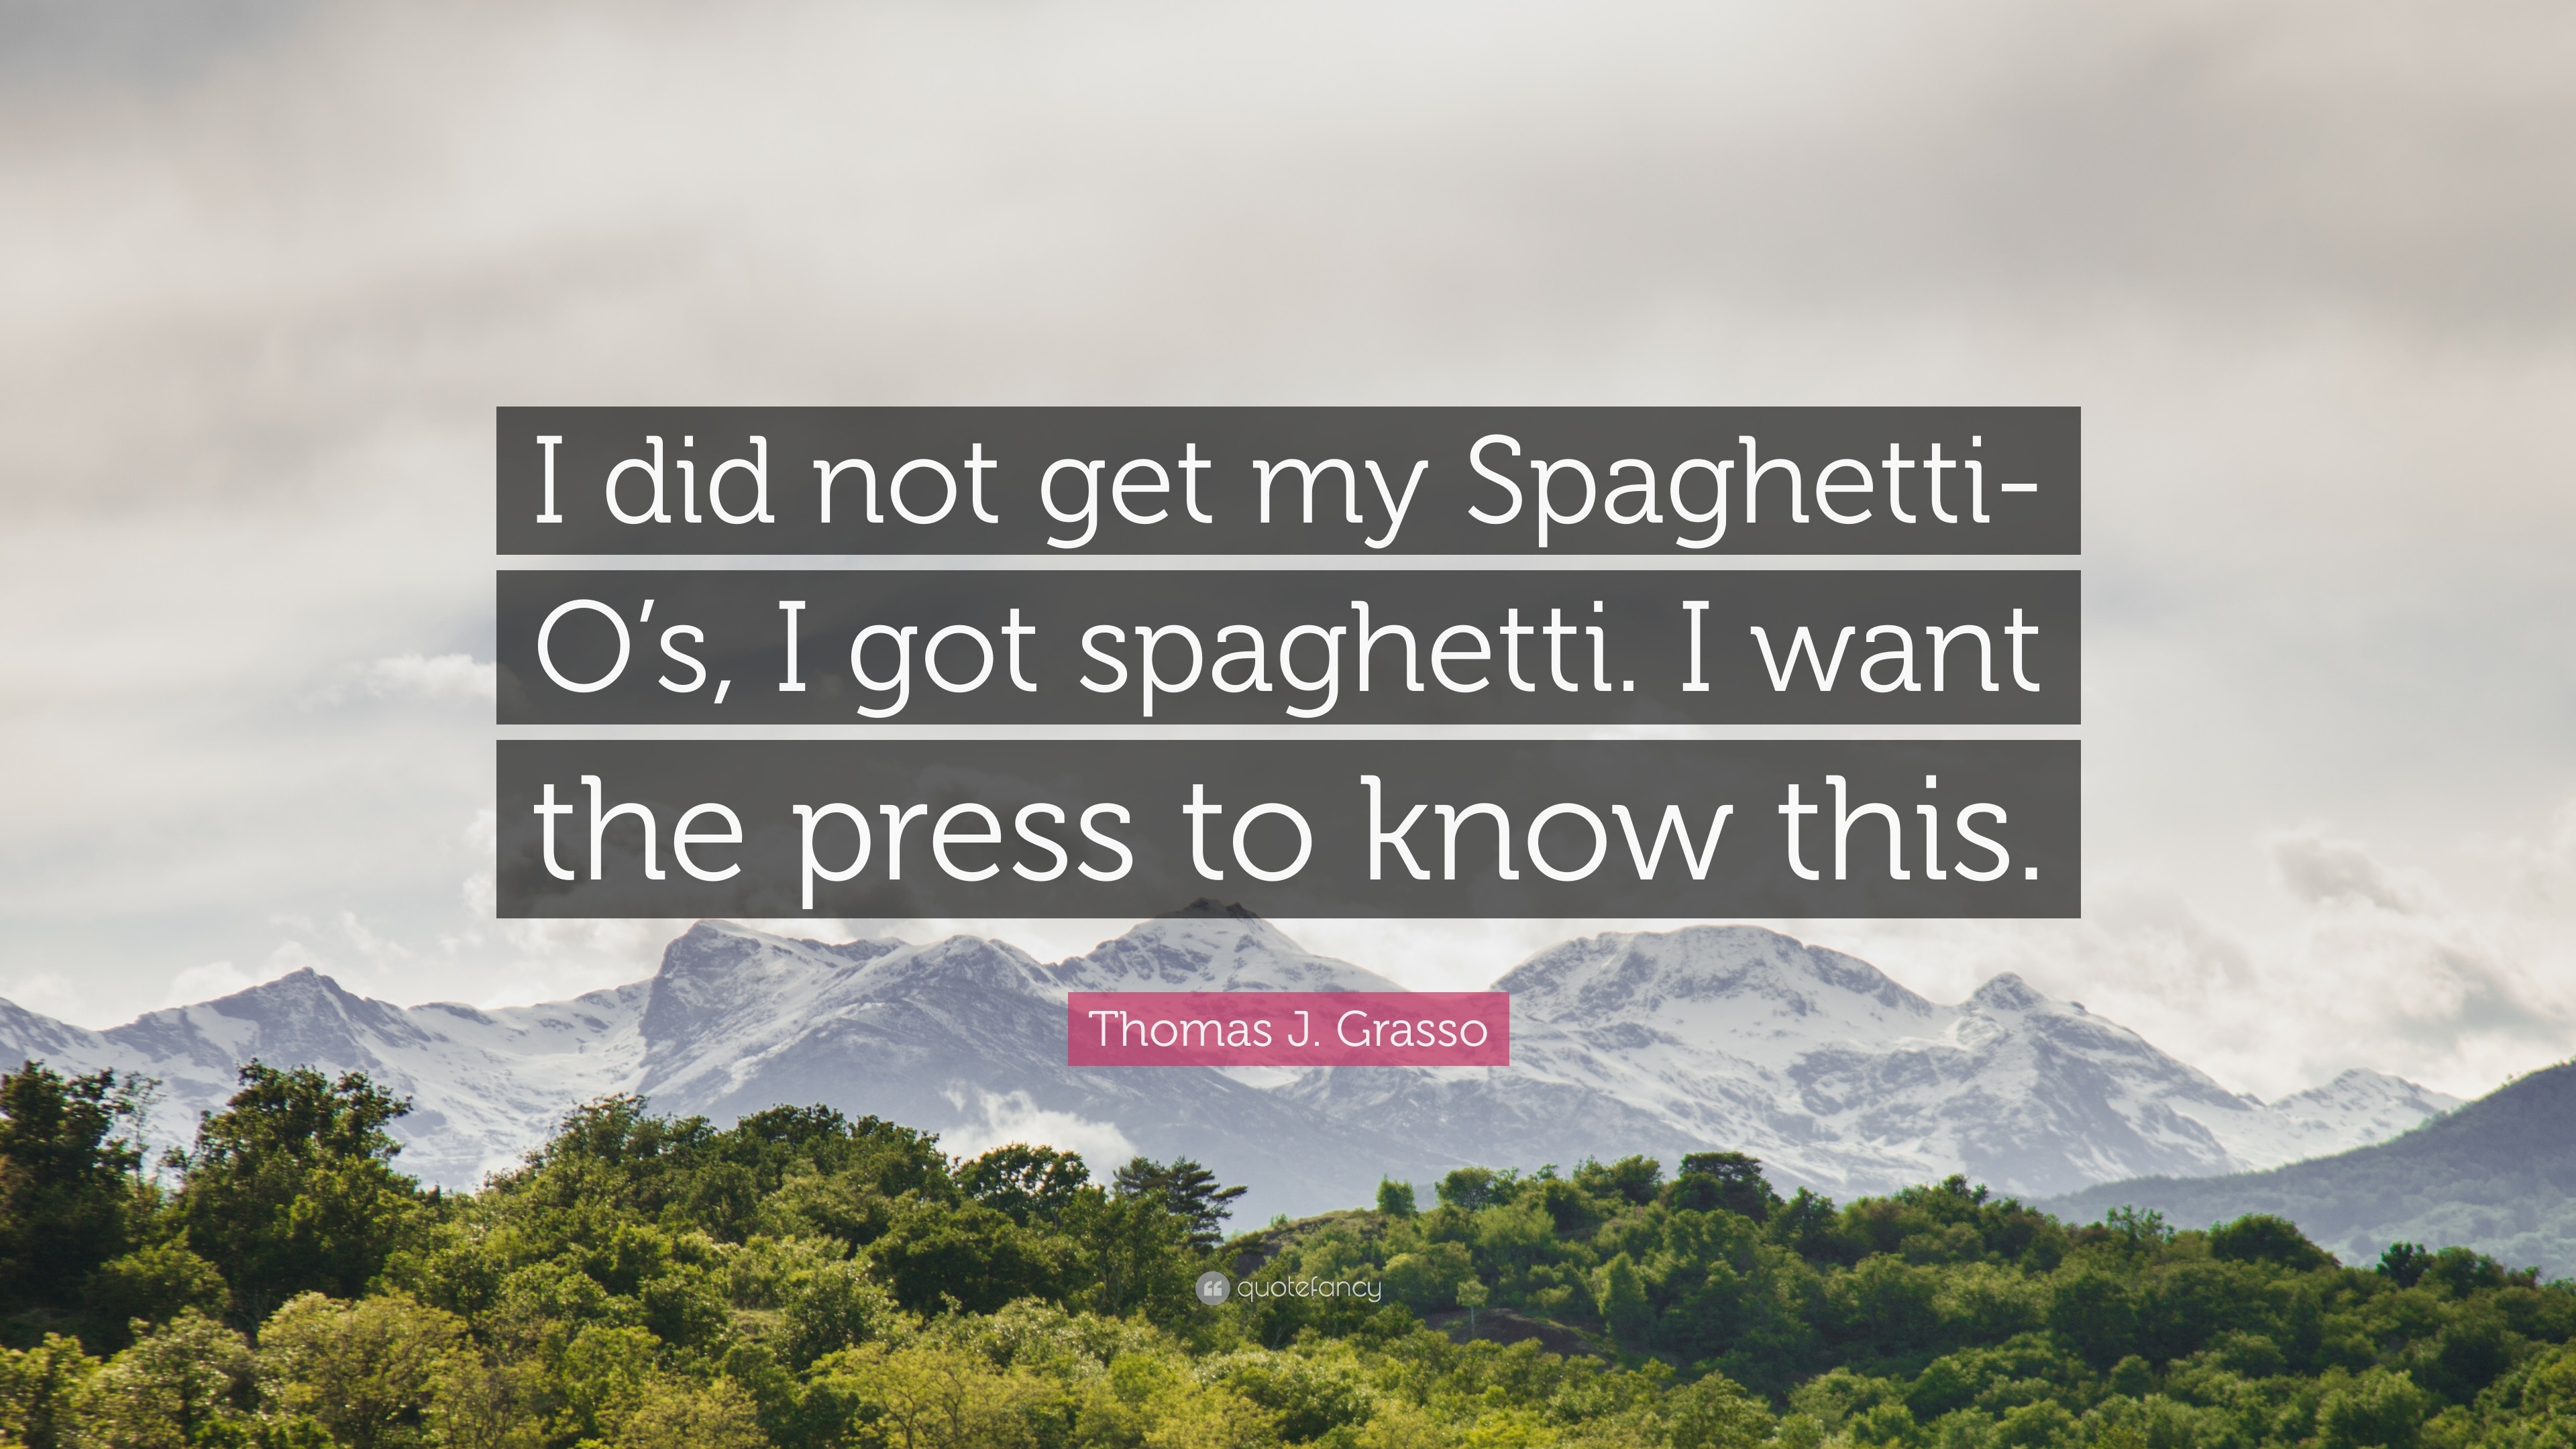 Thomas J. Grasso Quote: “I did not get my Spaghetti-O’s, I got ...